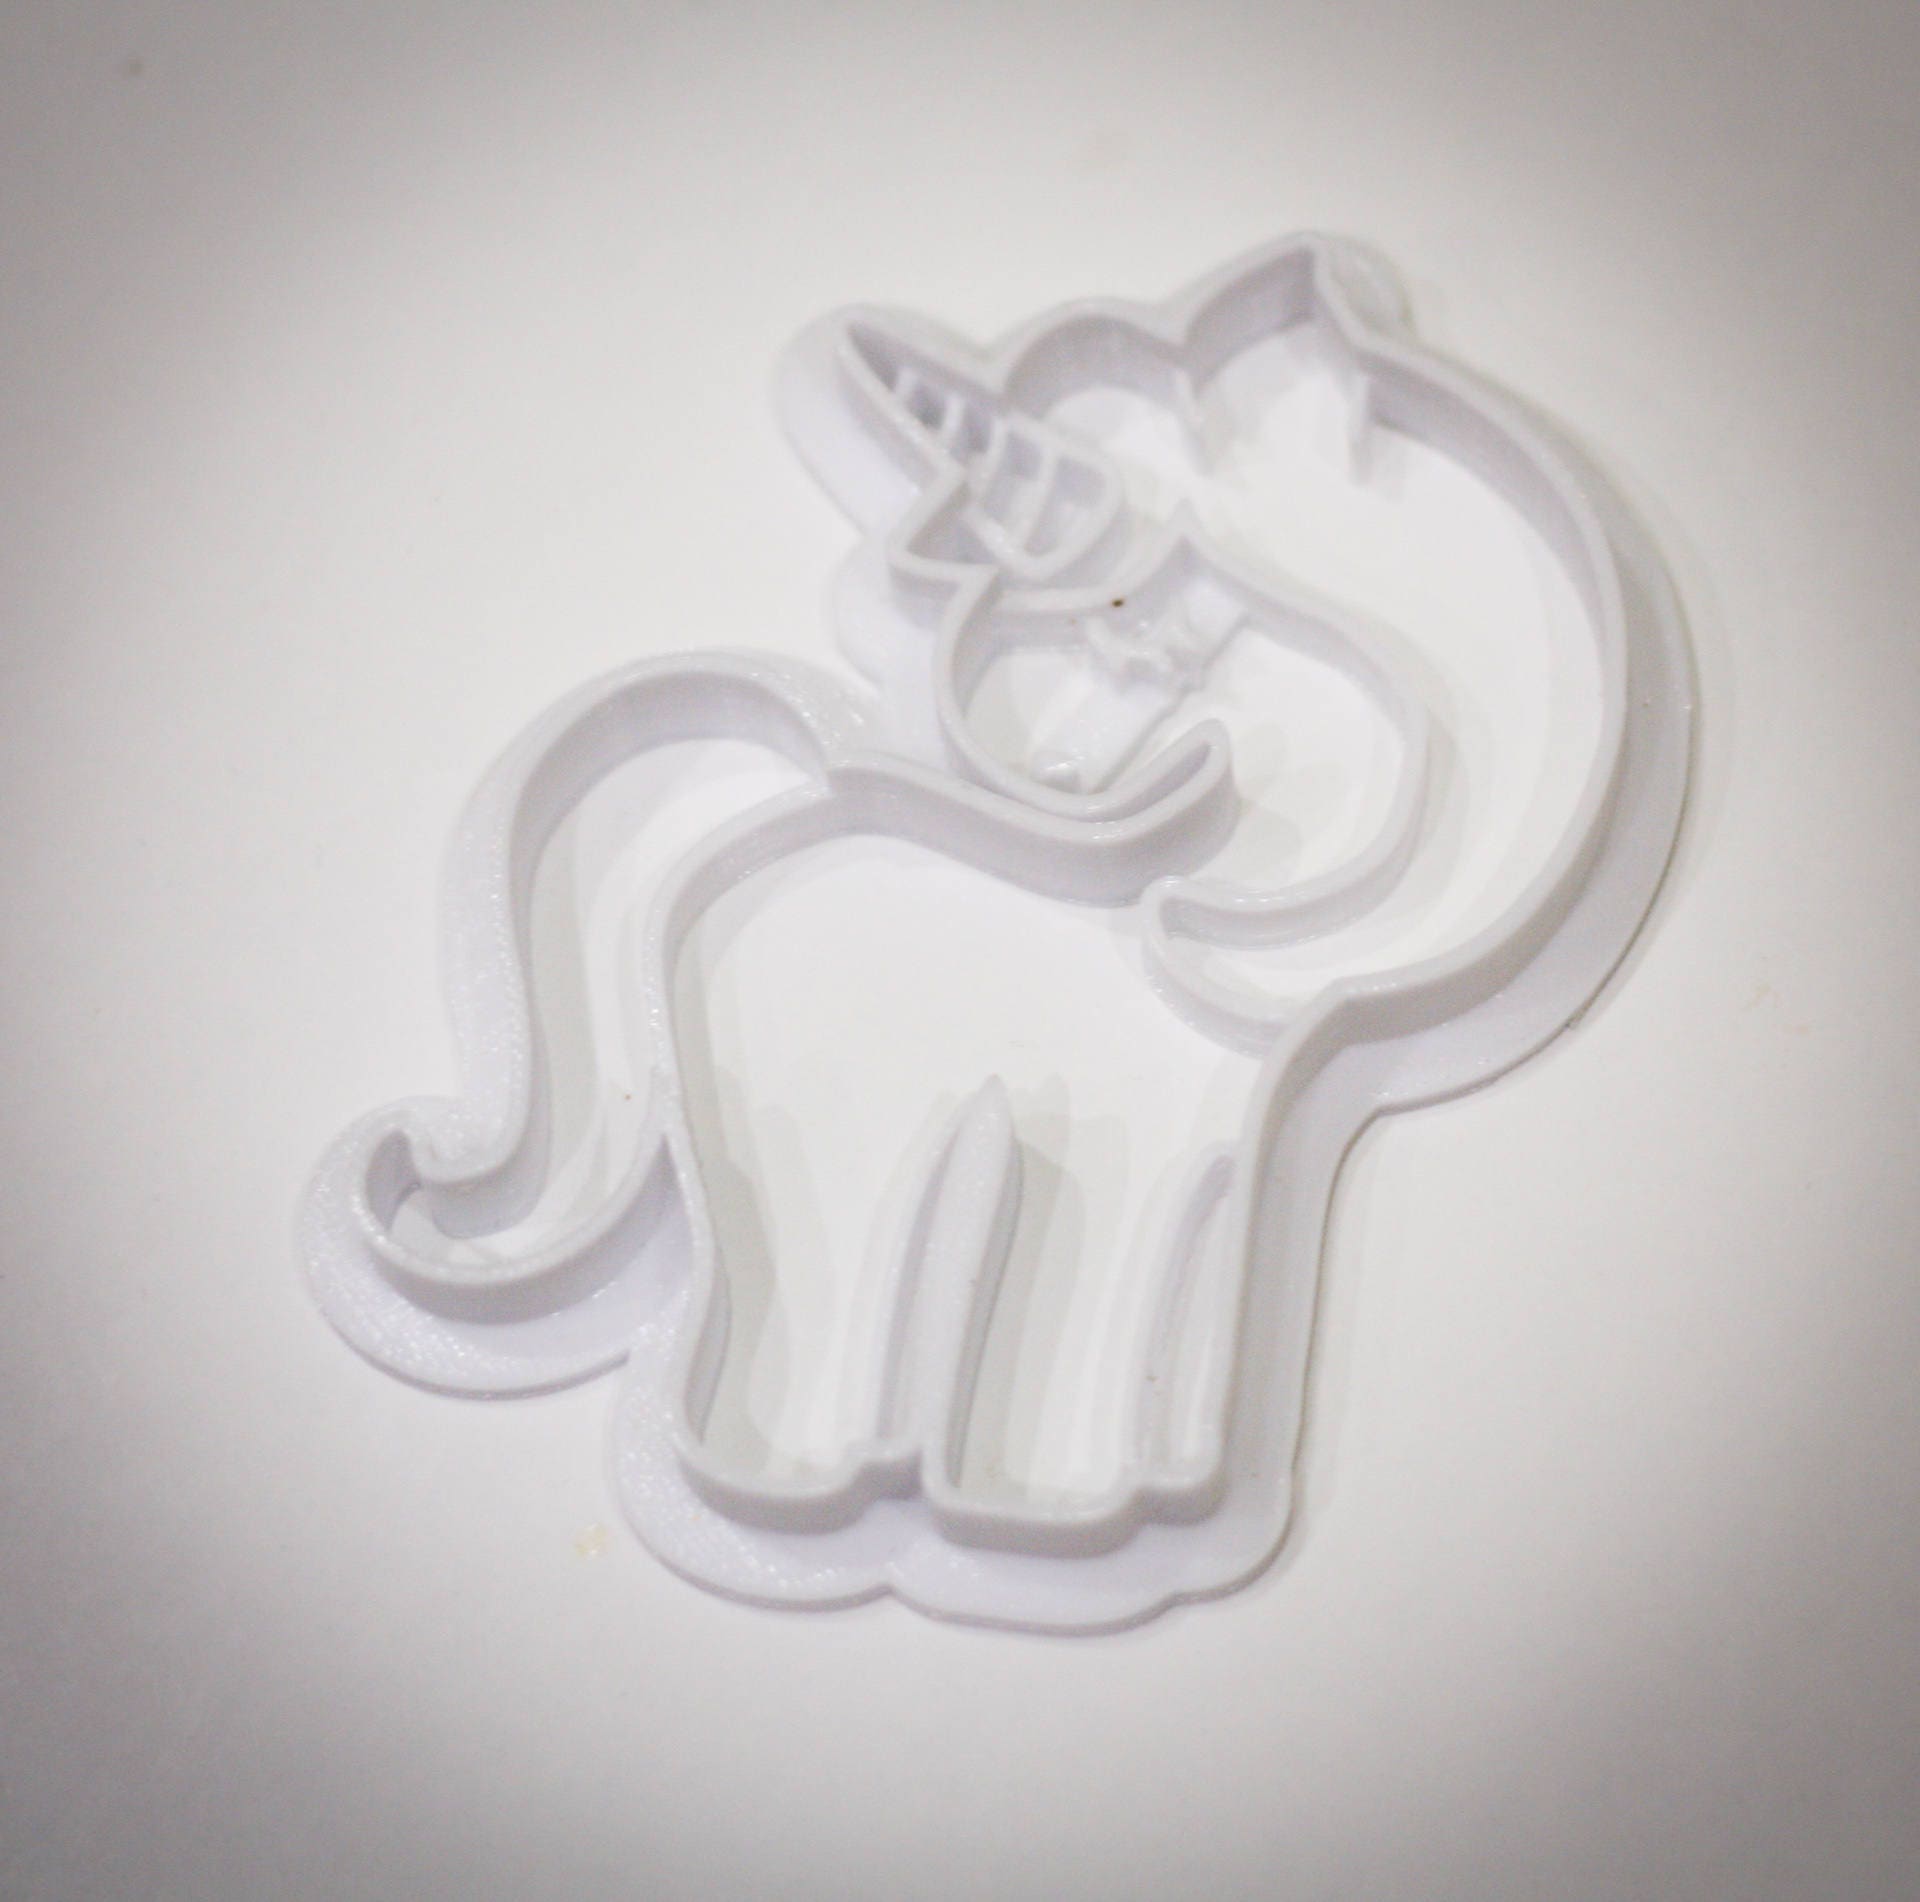 Unicorn Cookie Cutter | Fantasy Cookie Cutters | designer cutters | biscuit cutters | unicorn party | unicorn cookies | Cutters cookie stamp - 3DPrintProps